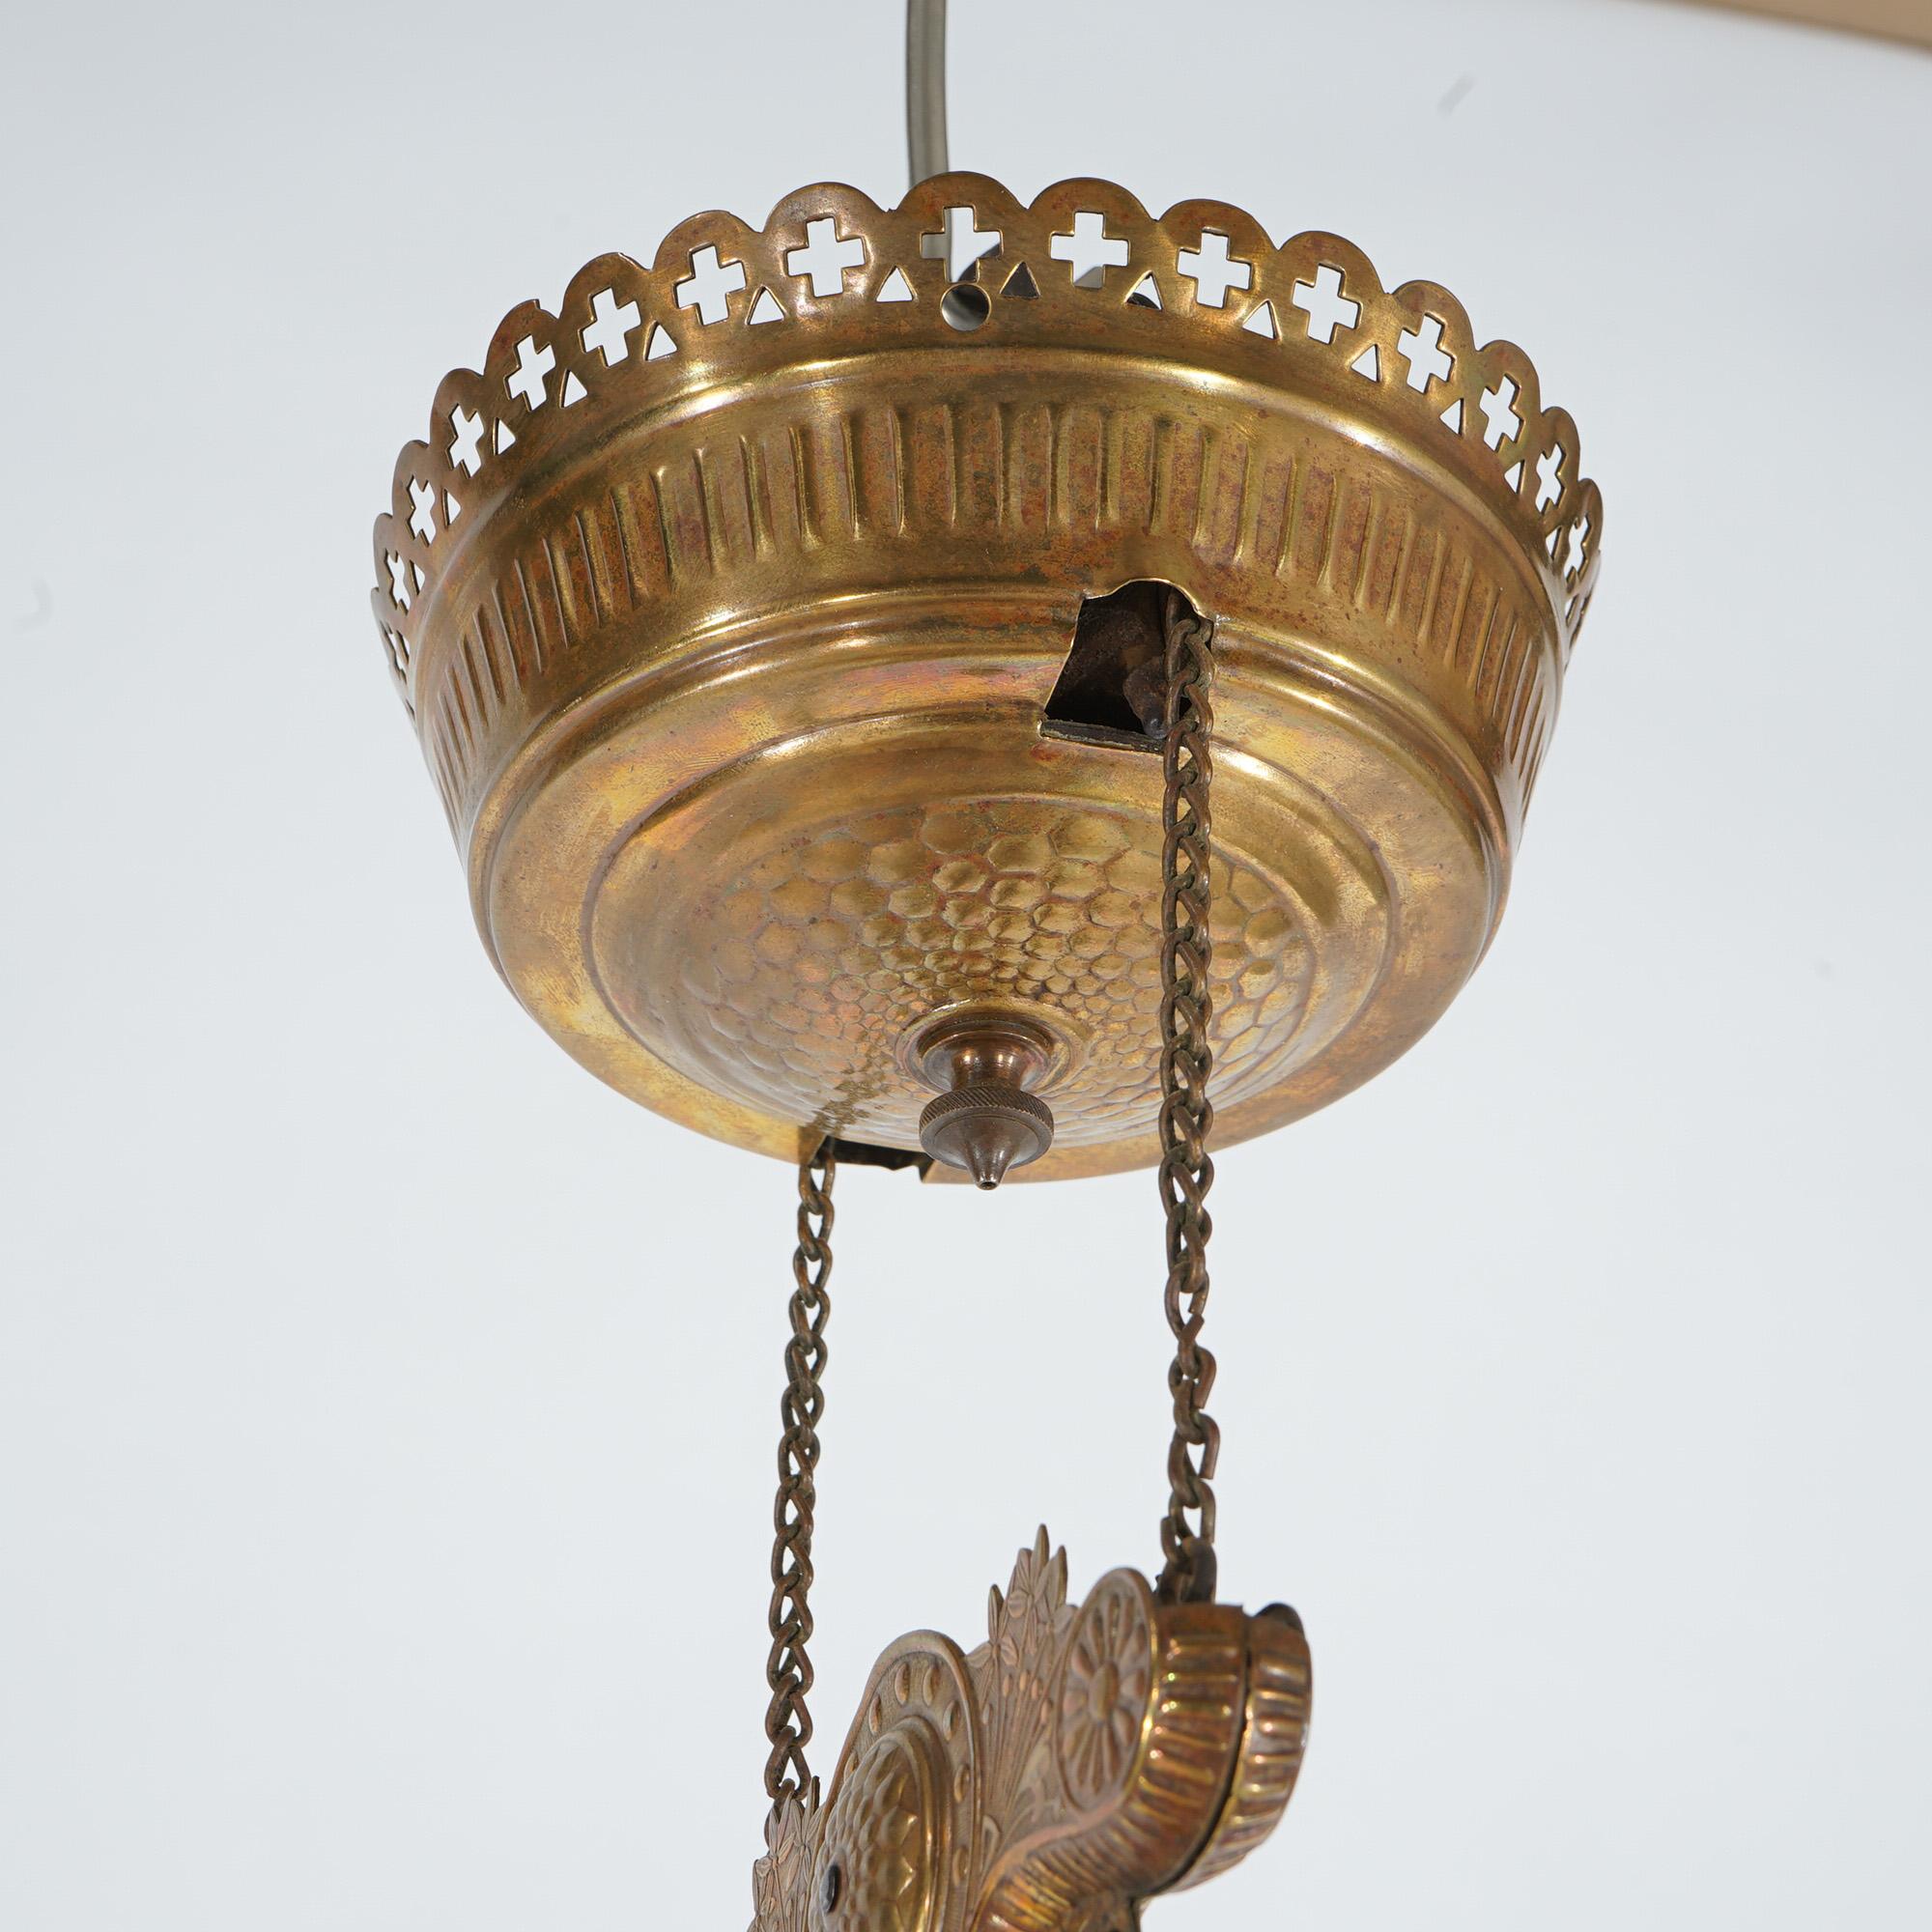 Antique Aesthetic Movement Hand Painted Hanging Kerosene Lamp C1890 For Sale 7